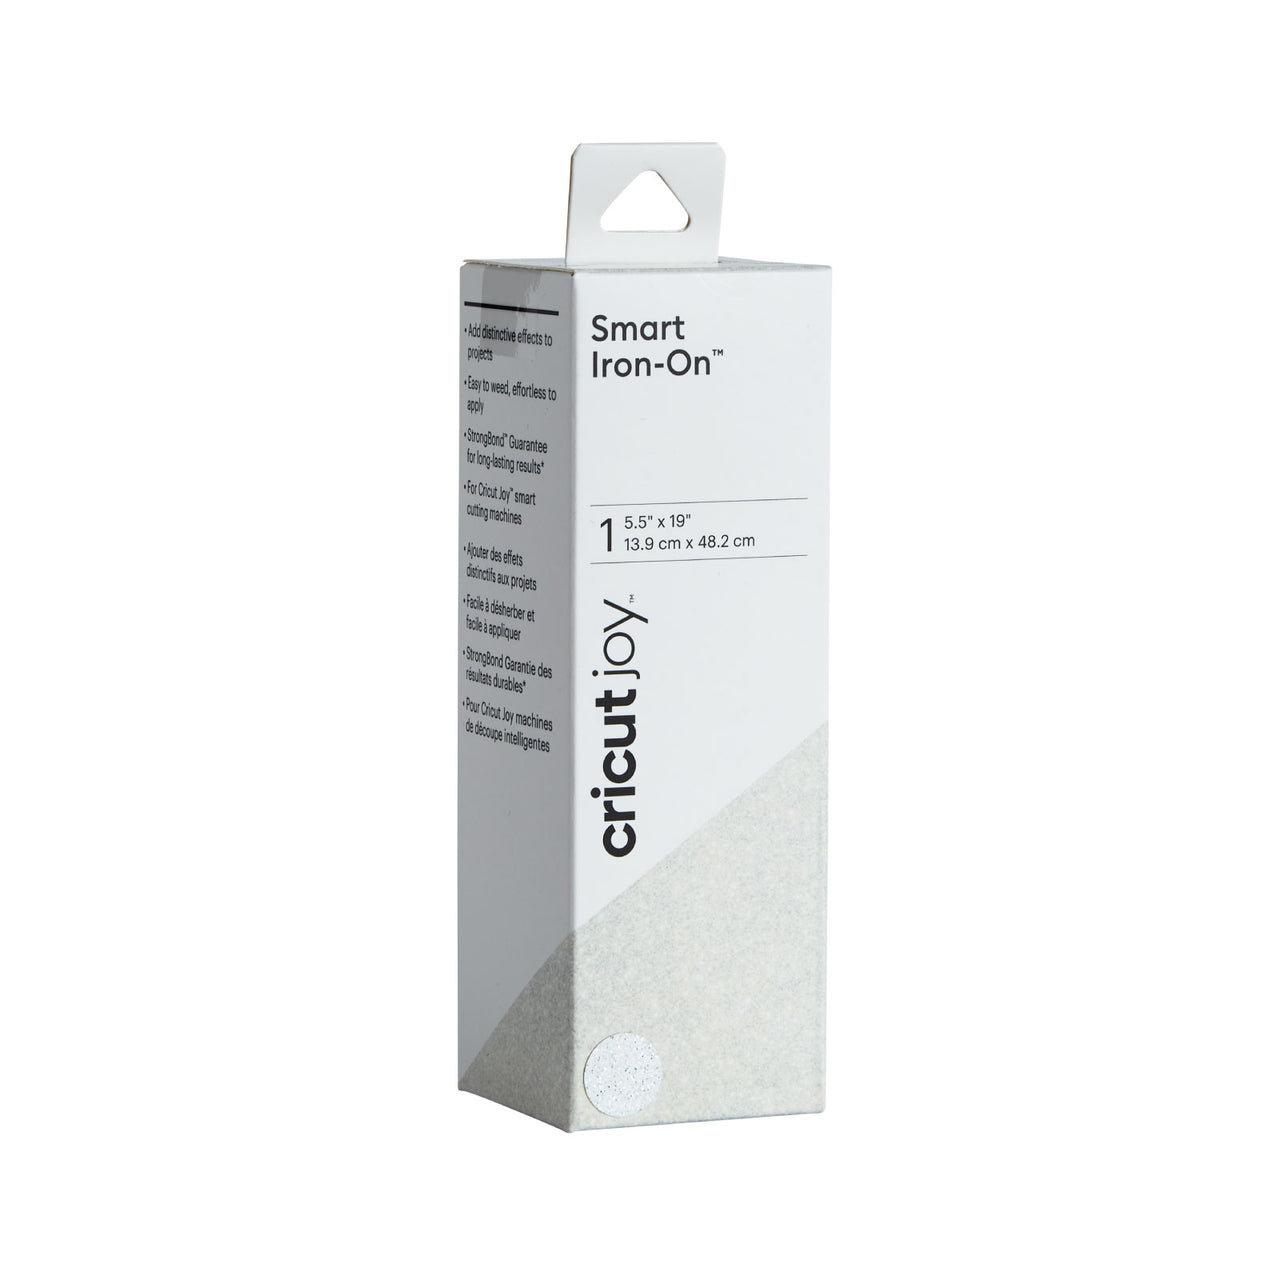 Cricut Joy Smart Glitter Iron On White - Damaged Package